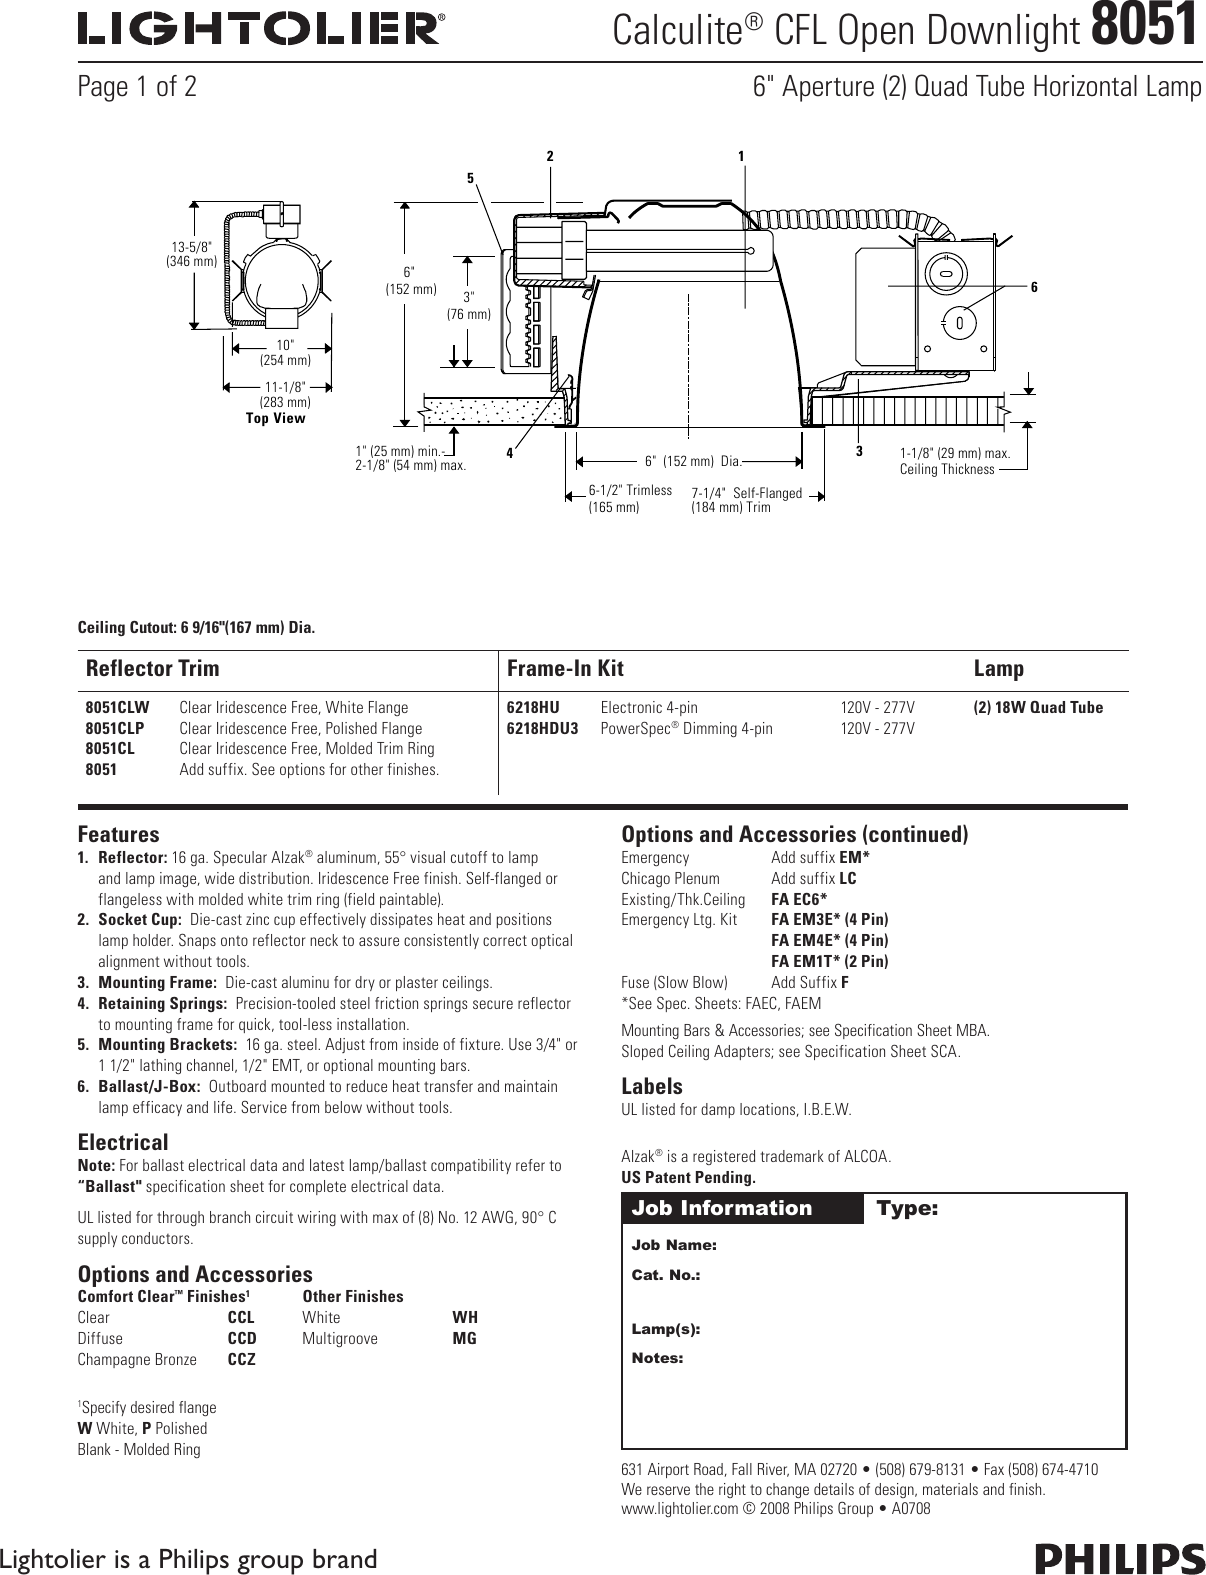 Page 1 of 2 - Lightolier Lightolier-Calculite-Cfl-Open-Downlight-8051-Users-Manual-  Lightolier-calculite-cfl-open-downlight-8051-users-manual